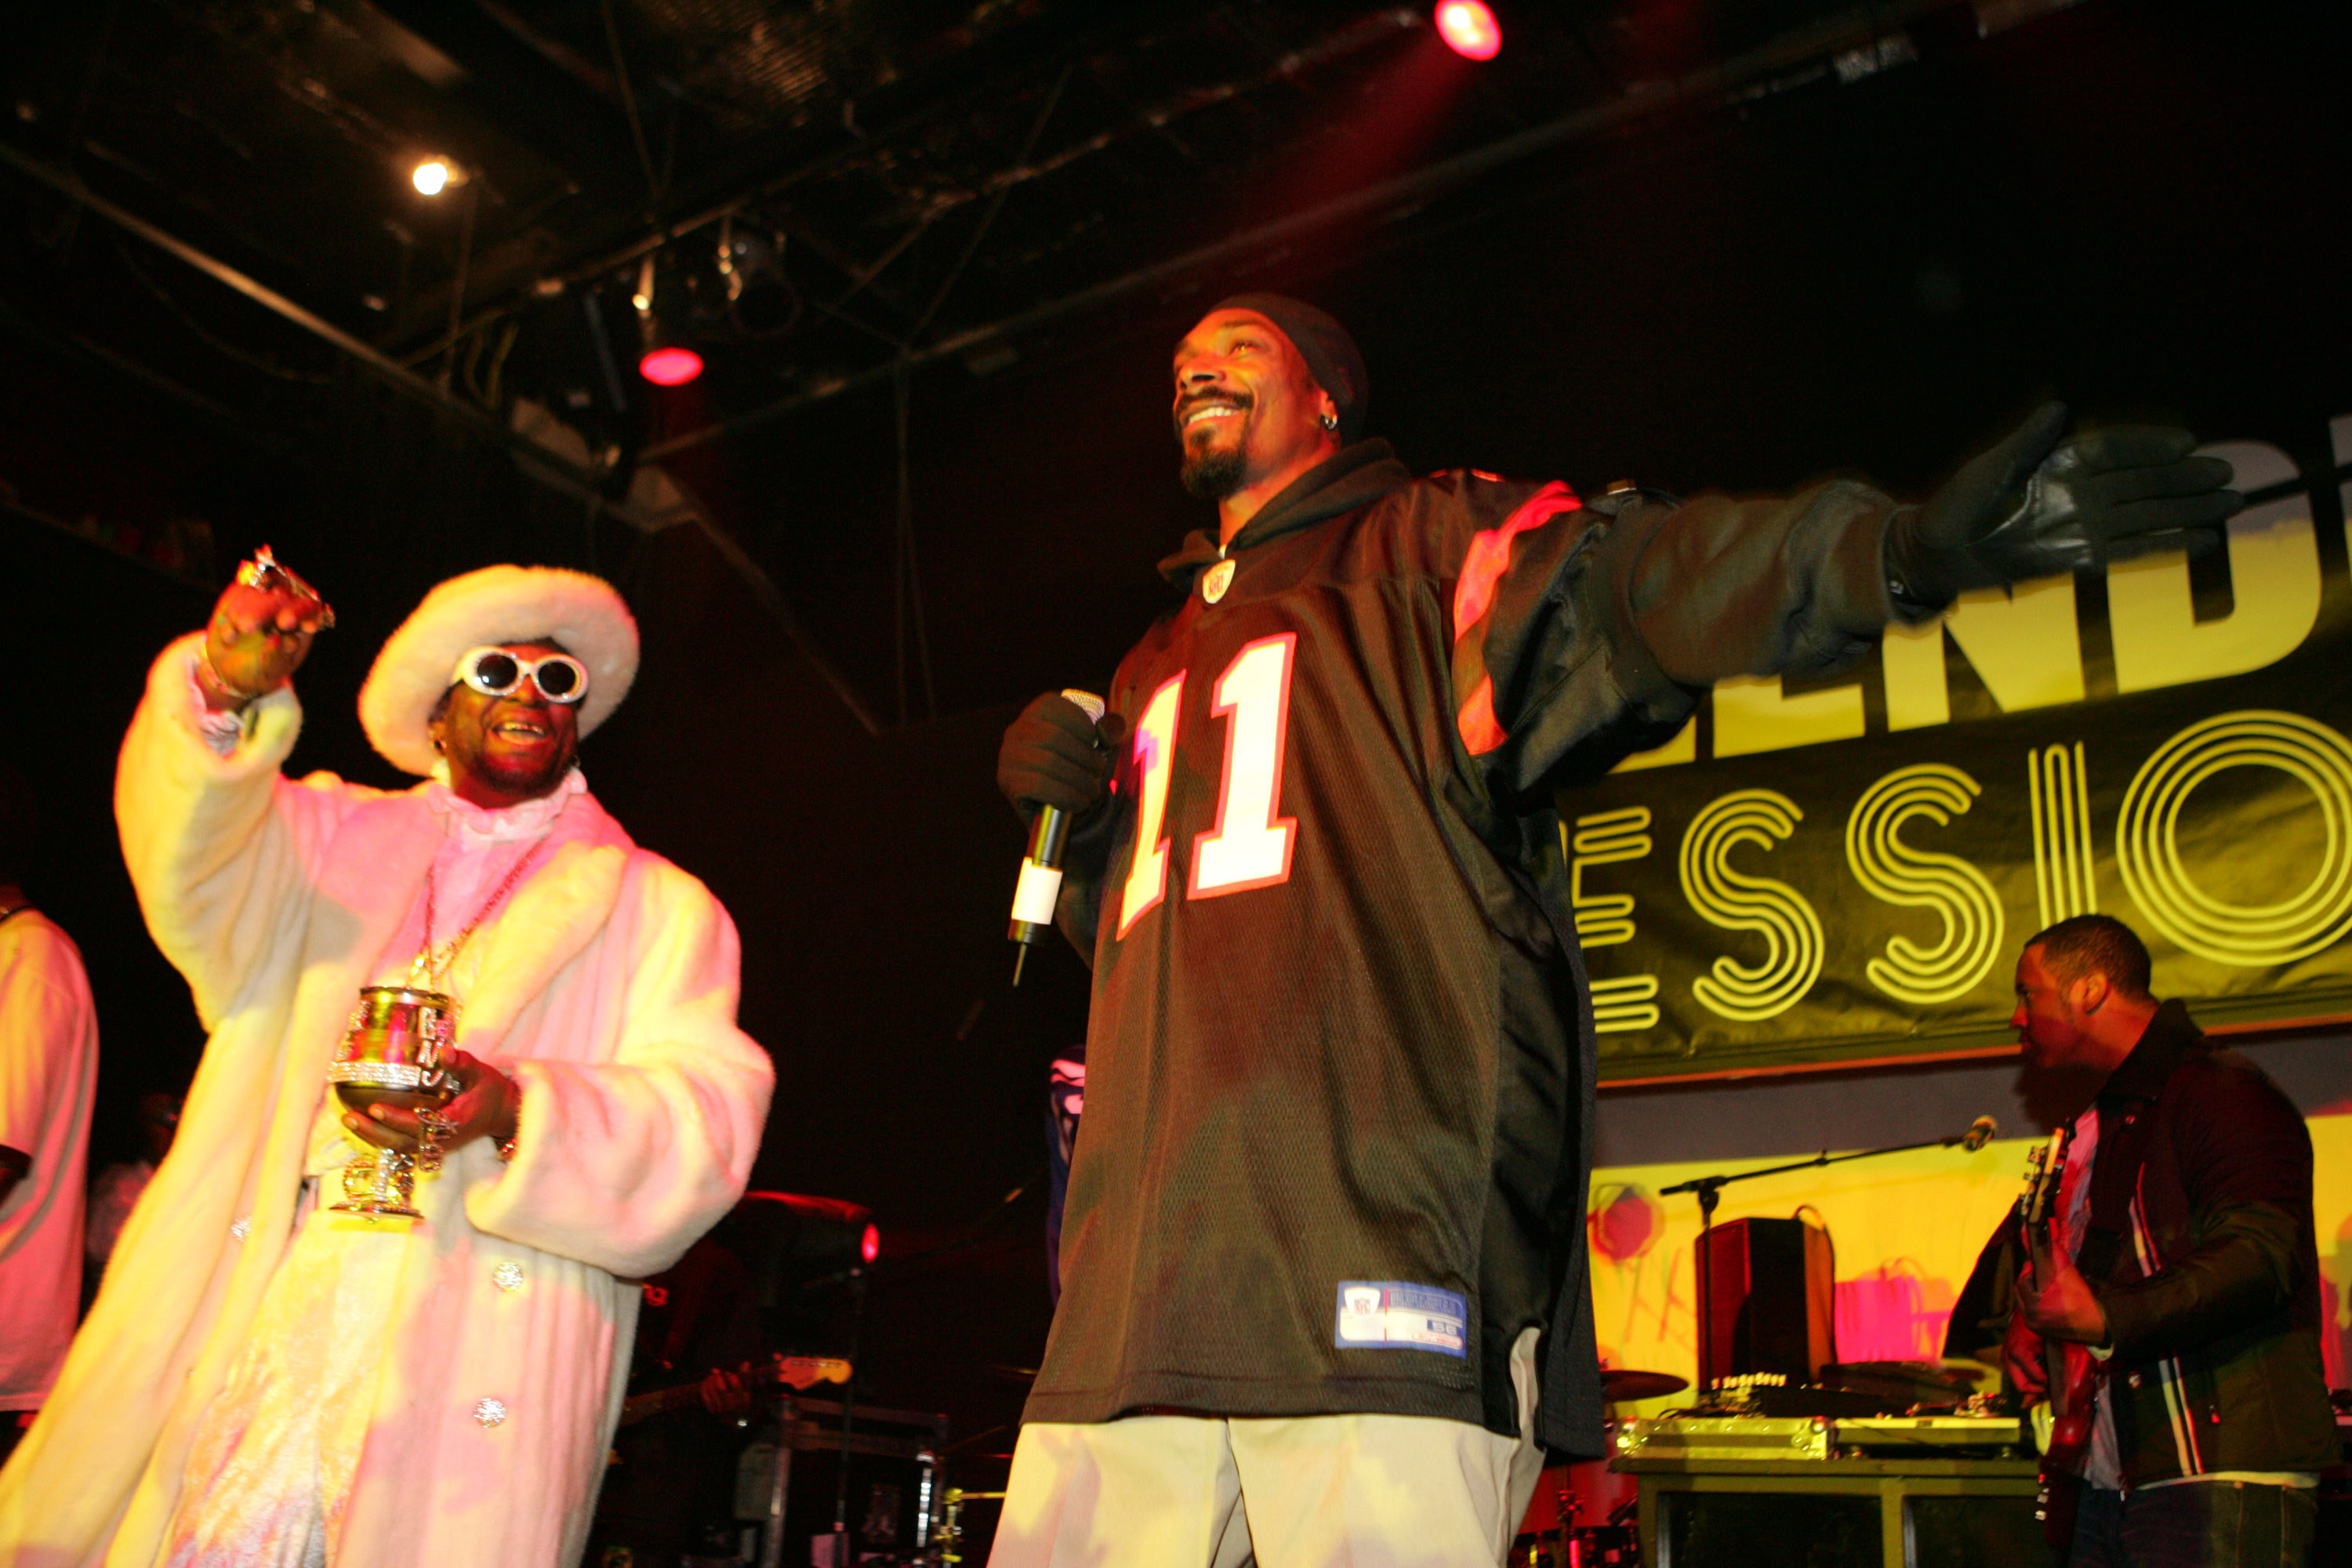 Snoop and Bishop on stage together